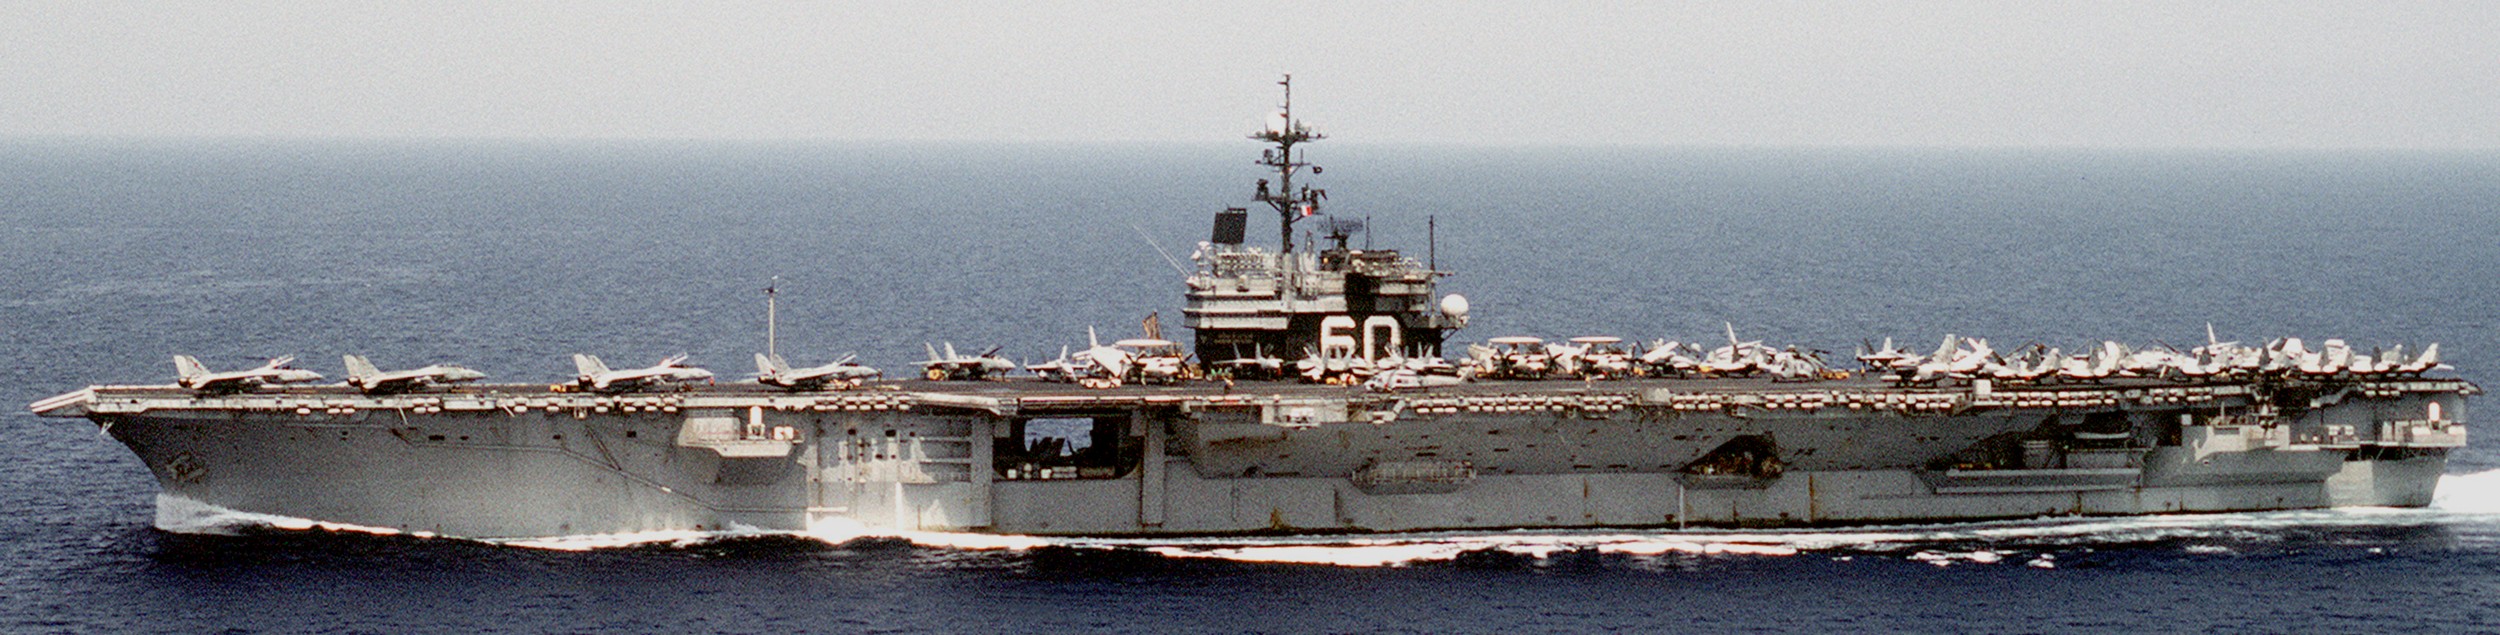 cv-60 uss saratoga forrestal class aircraft carrier air wing cvw-17 us navy adriatic sea 132